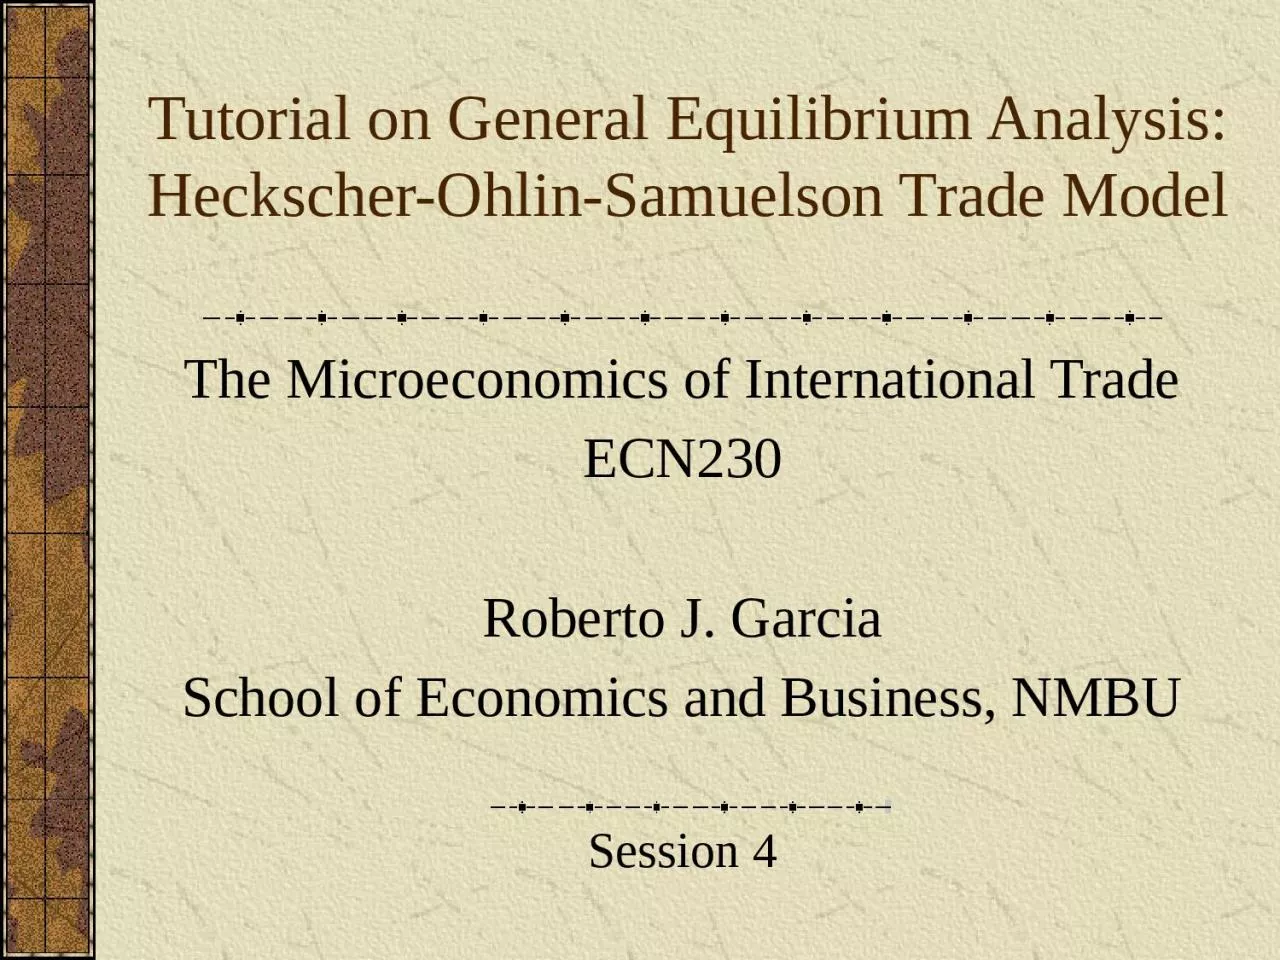 Tutorial on General Equilibrium Analysis: Heckscher-Ohlin-Samuelson Trade Model